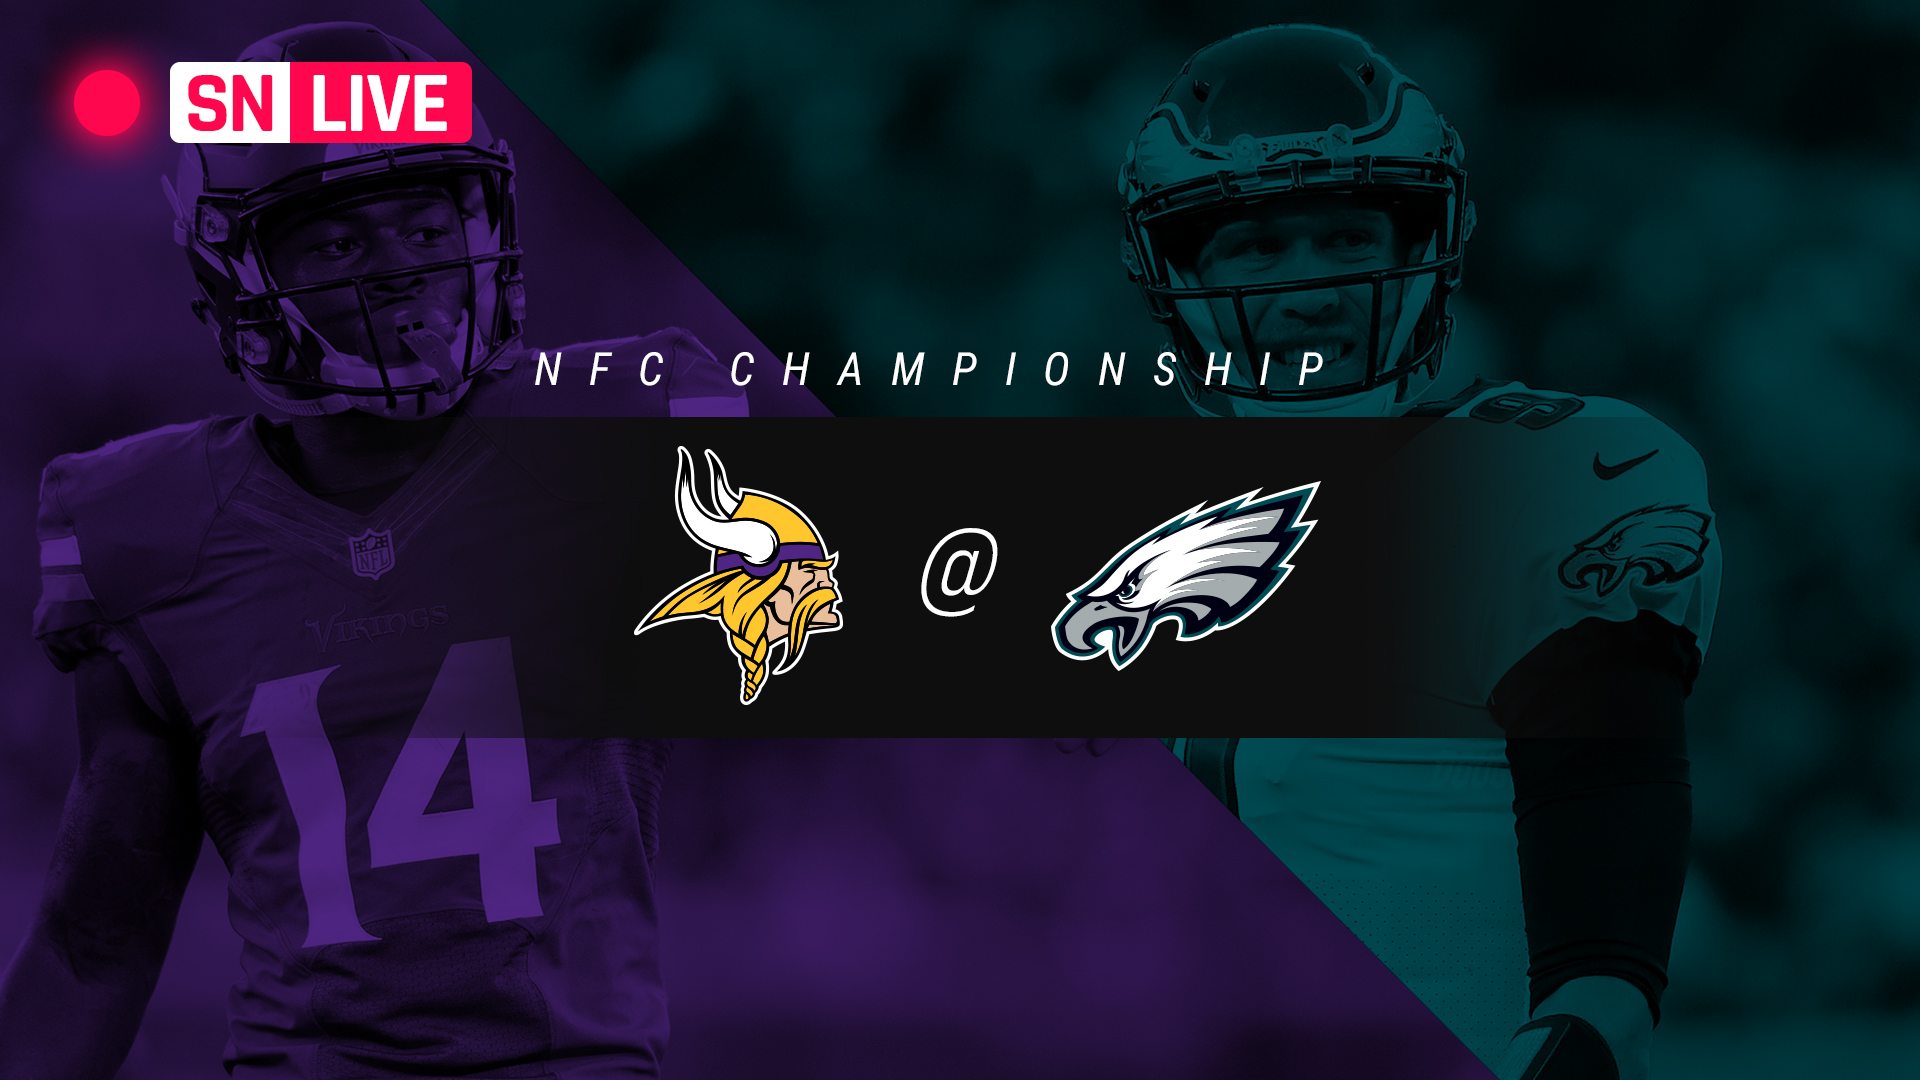 Vikings vs. Eagles Score, live updates from NFC championship game